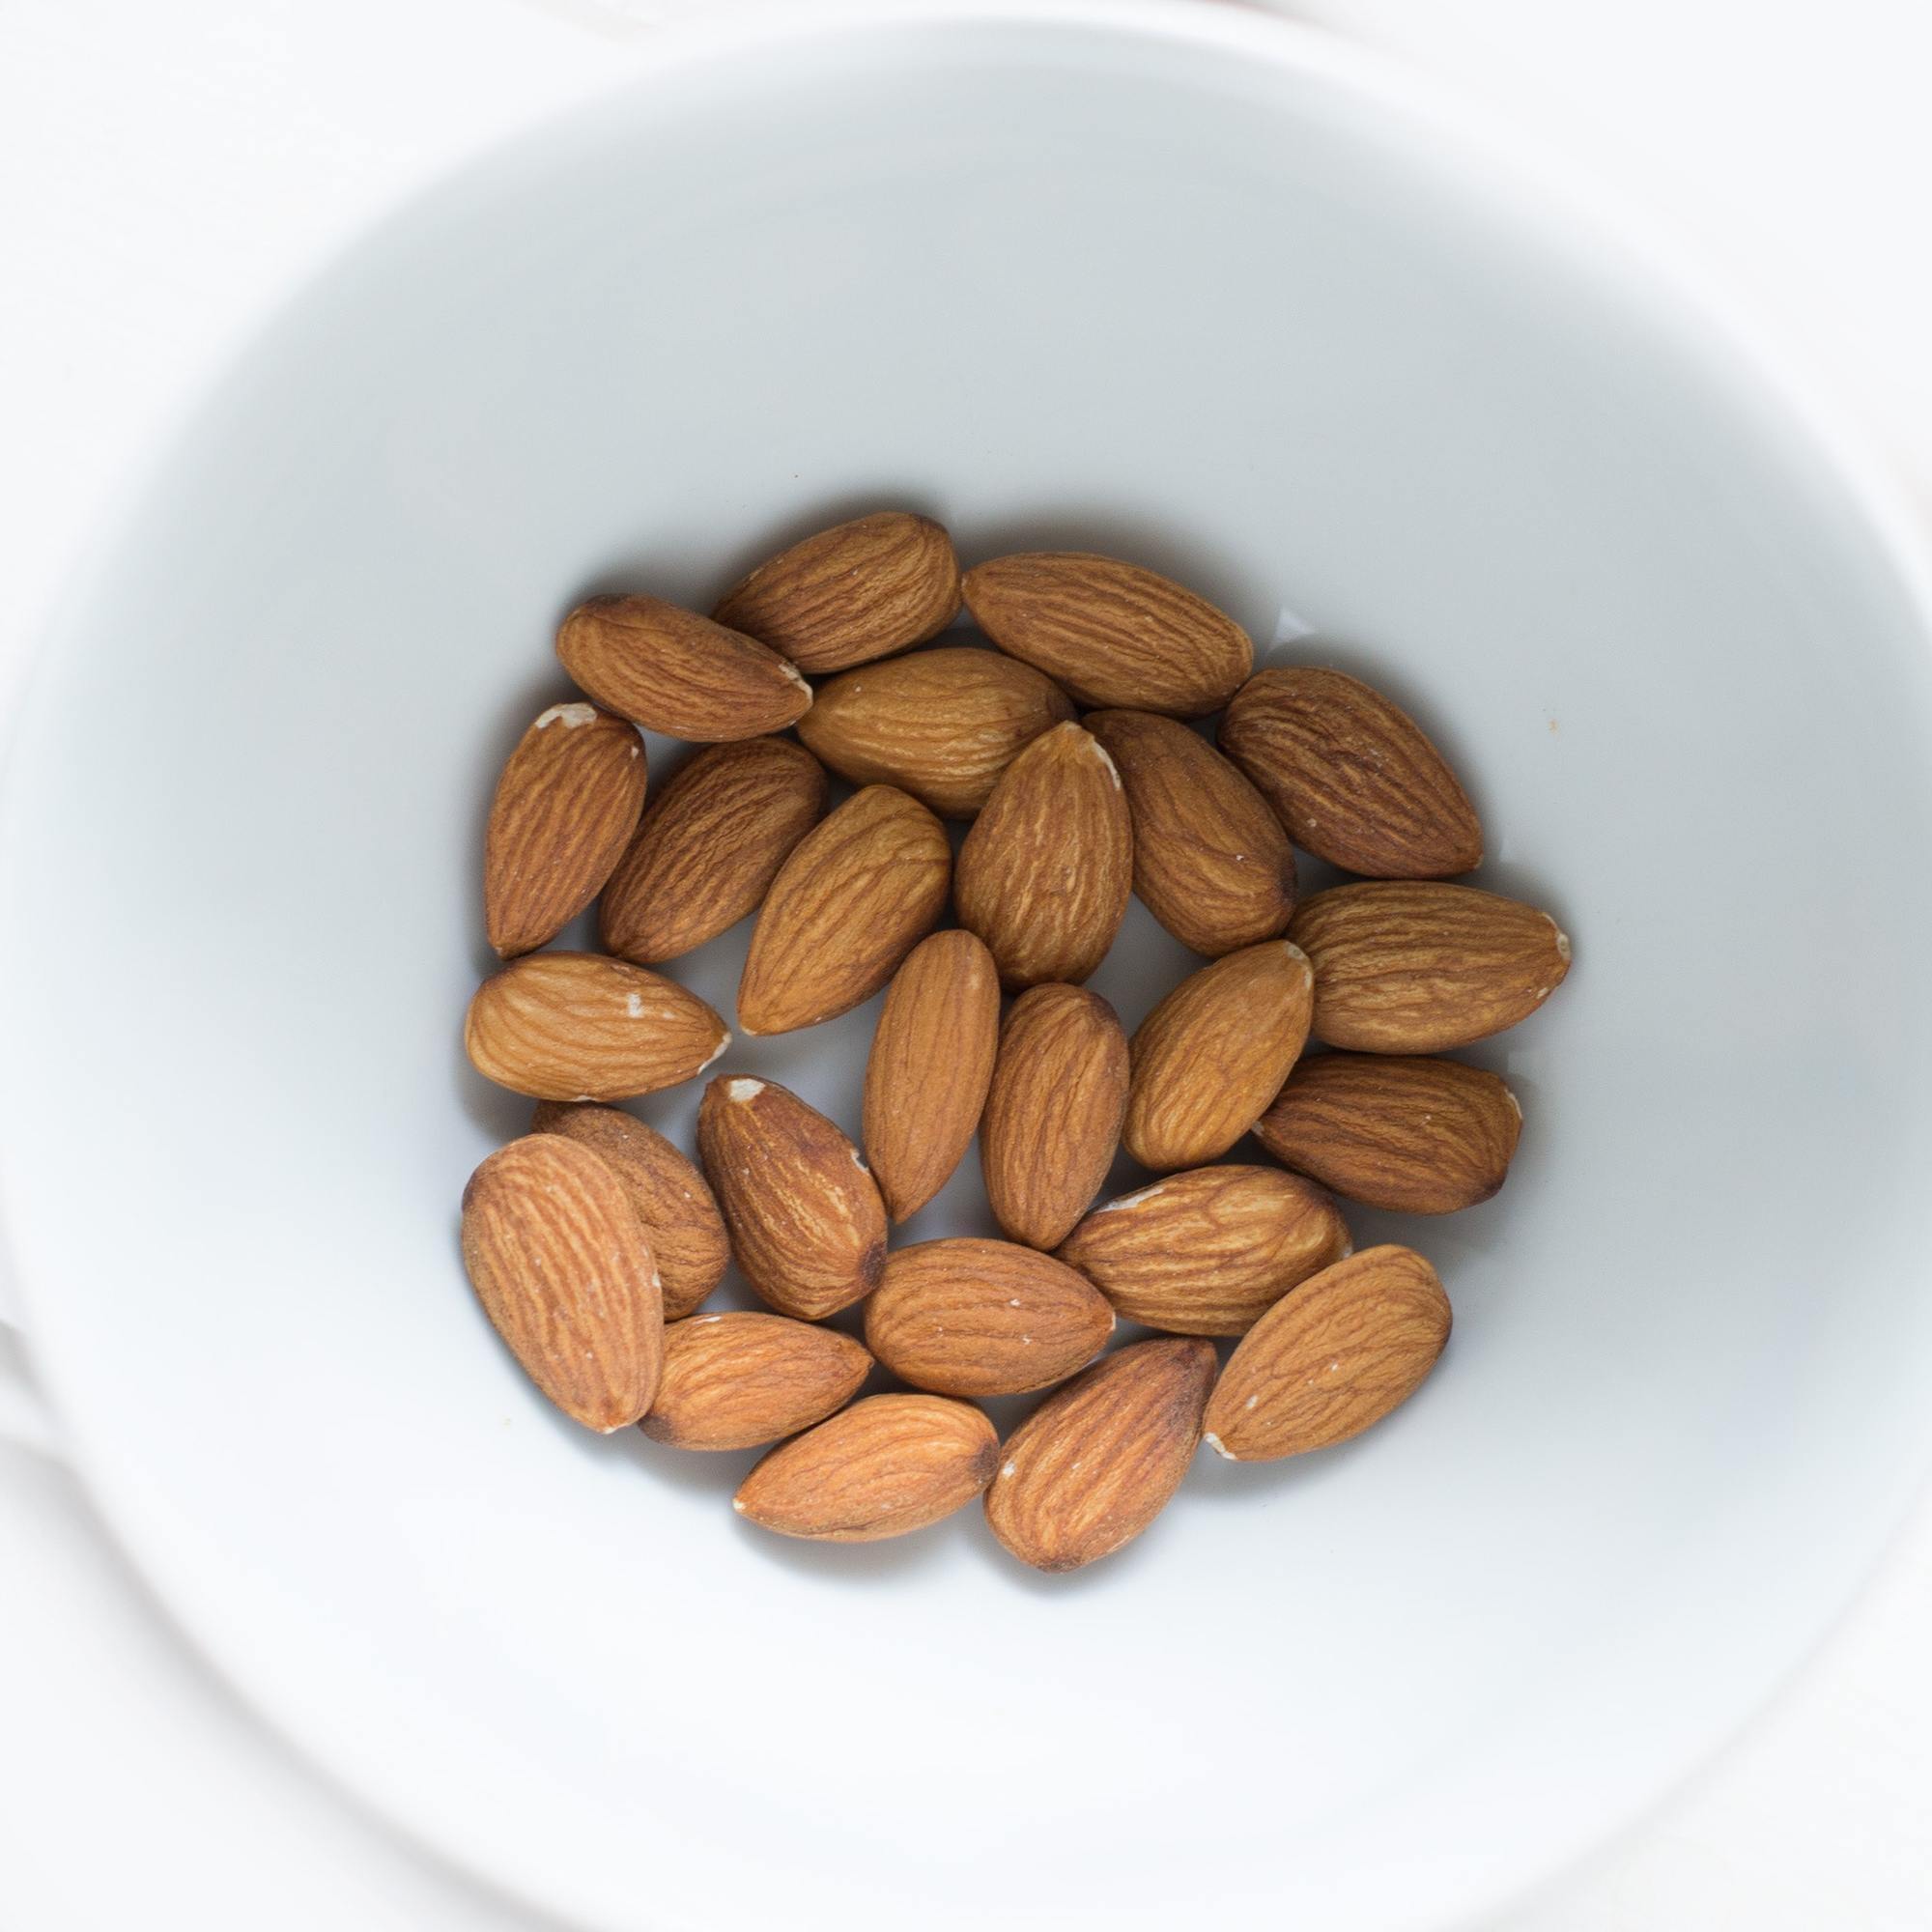 almonds in a white bowl